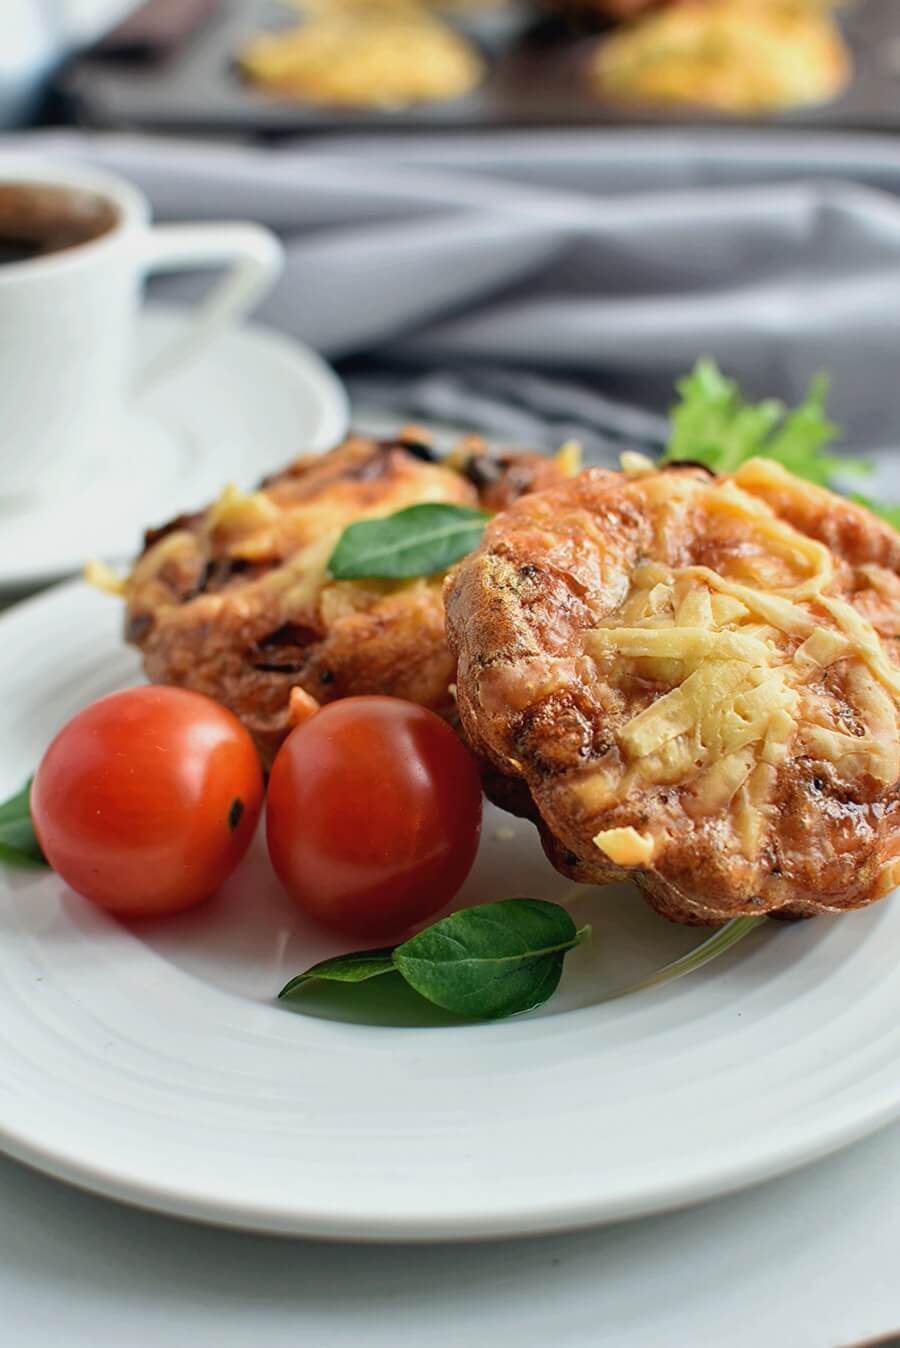 Pie maker breakfast muffin recipe